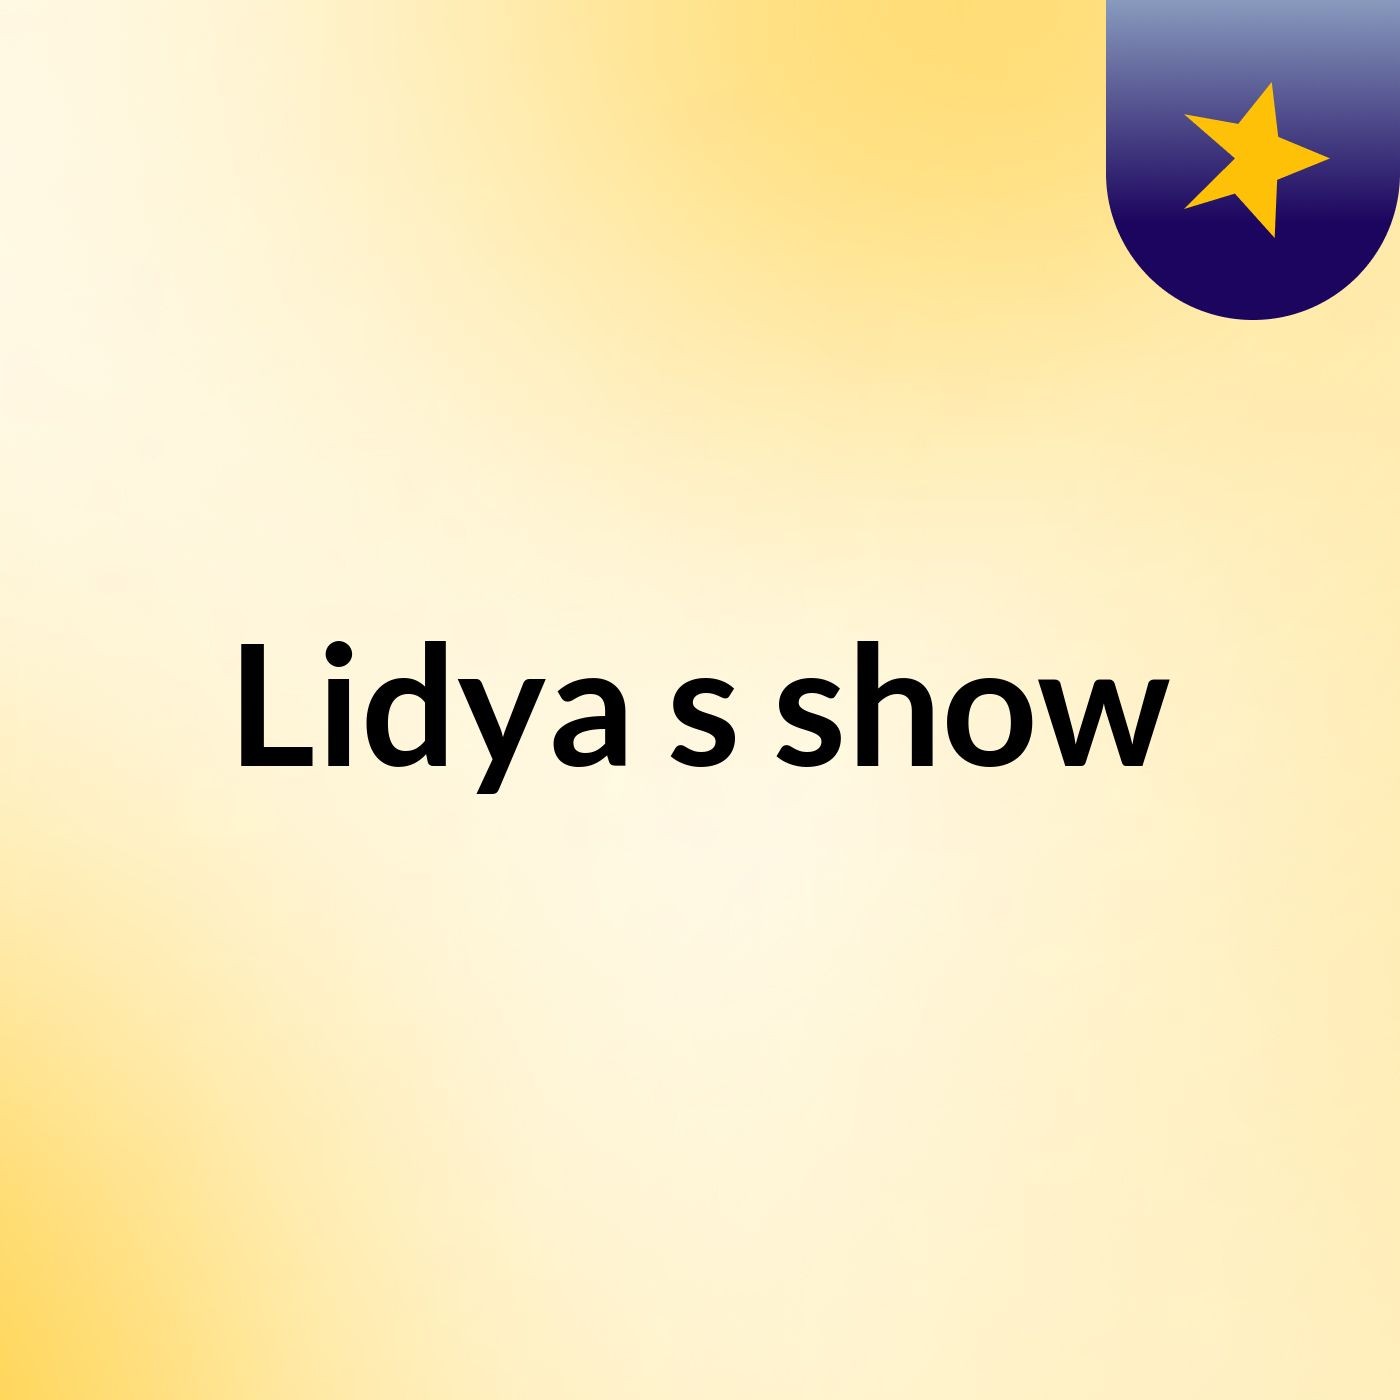 Lidya's show